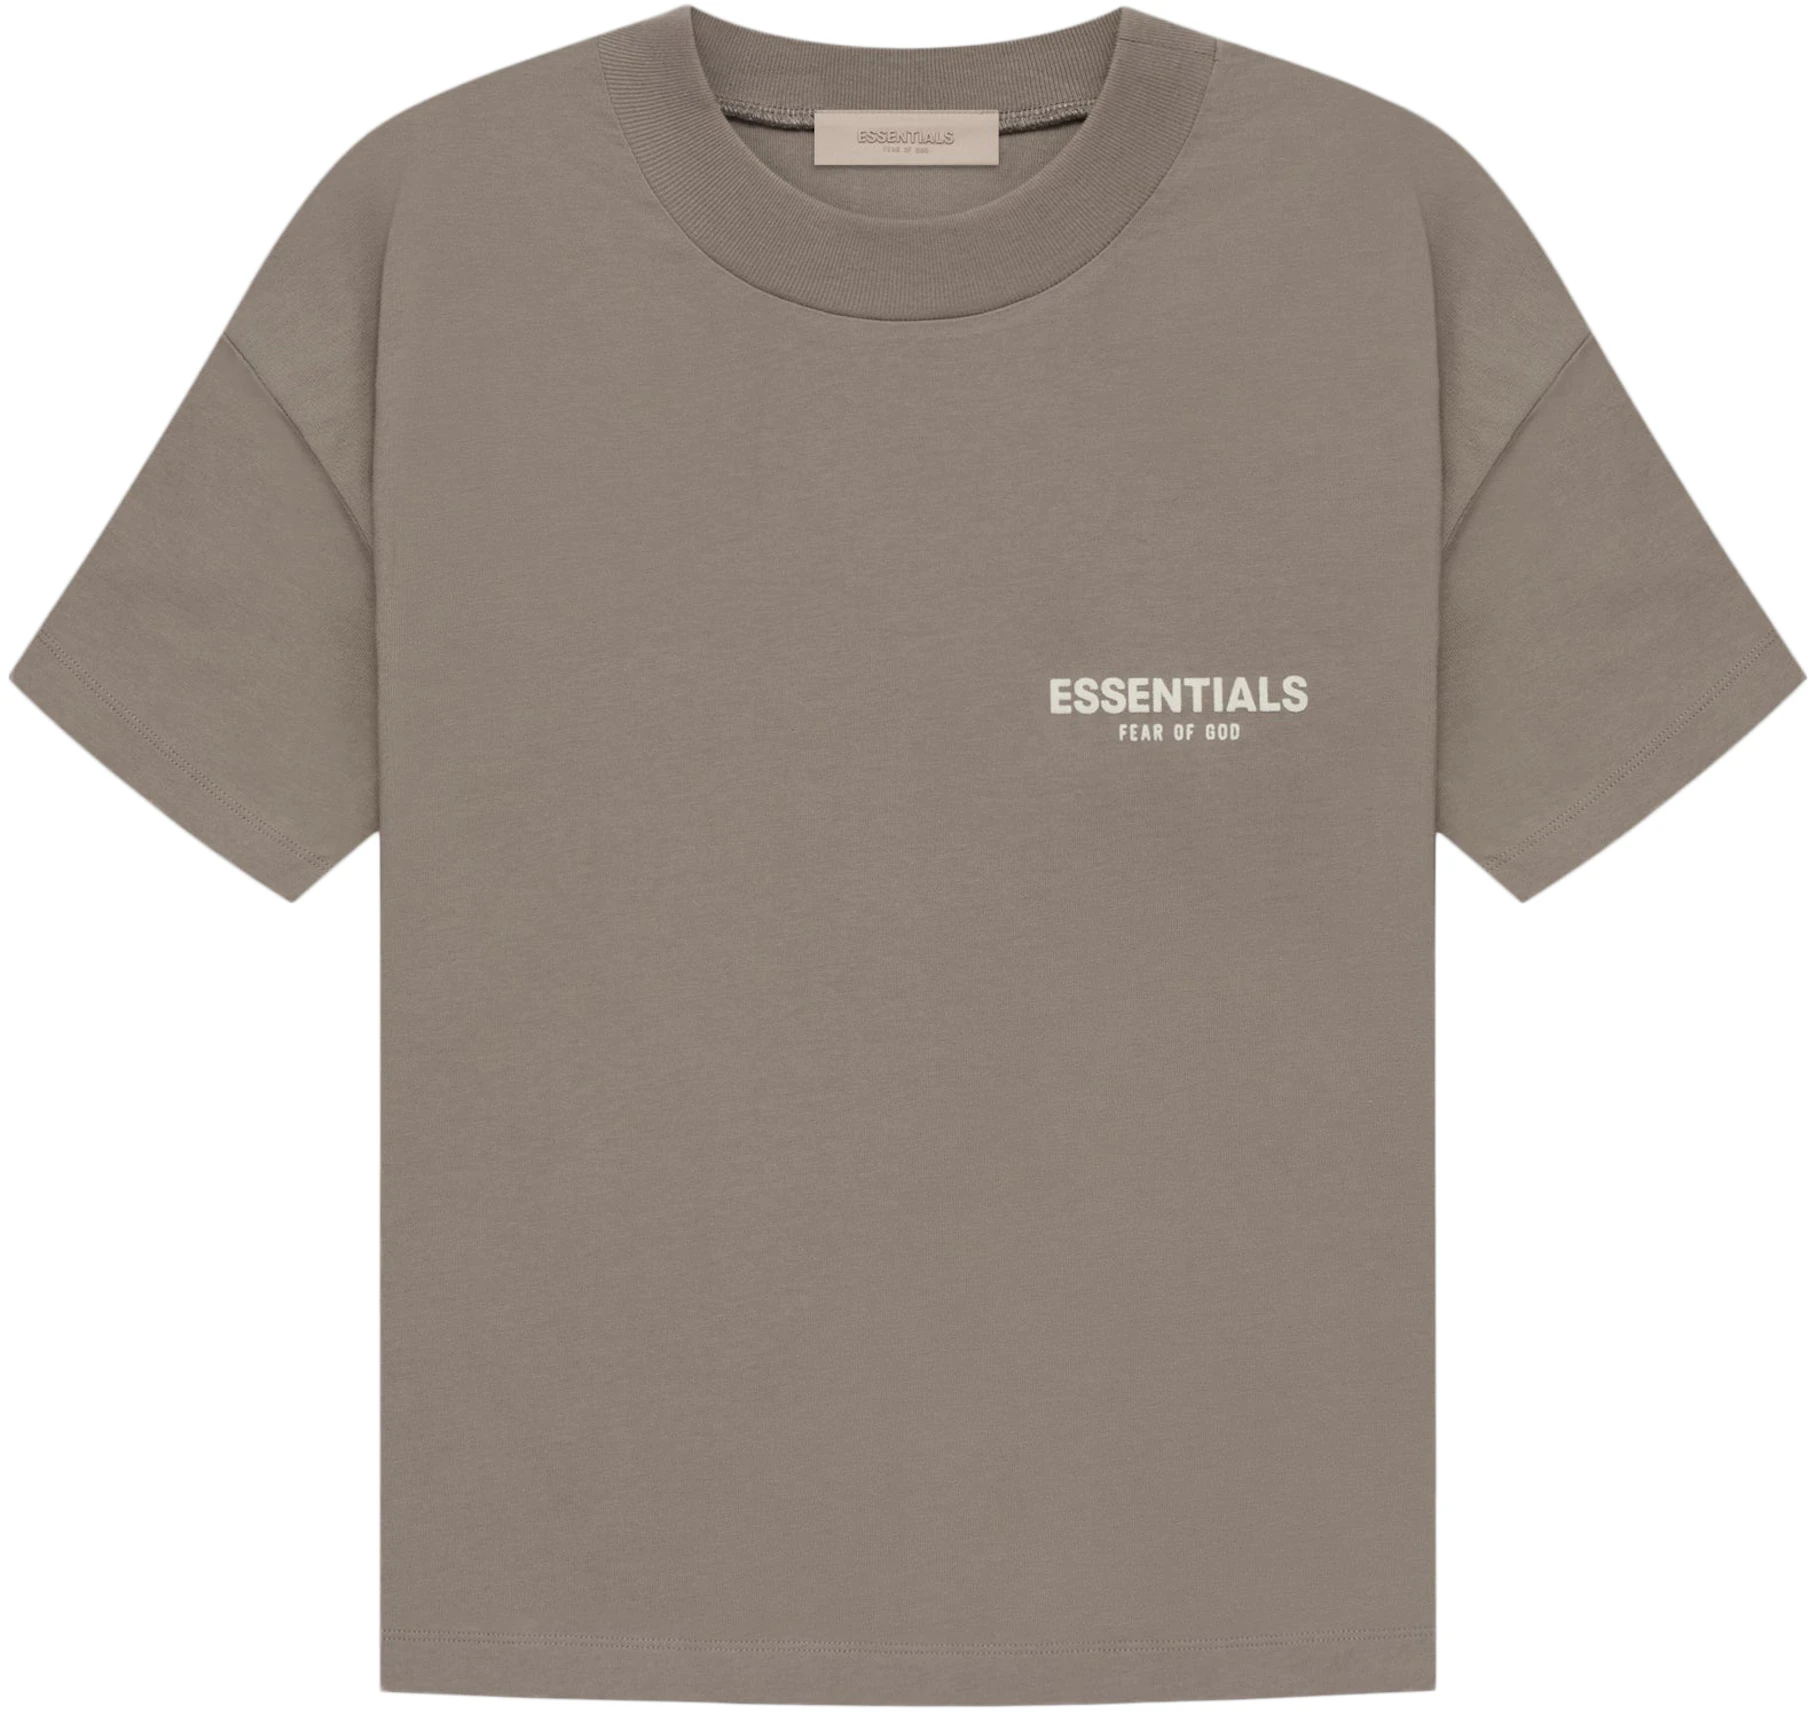 Rood barrière vrijwilliger Fear of God Essentials T-shirt Desert Taupe - SS22 - US